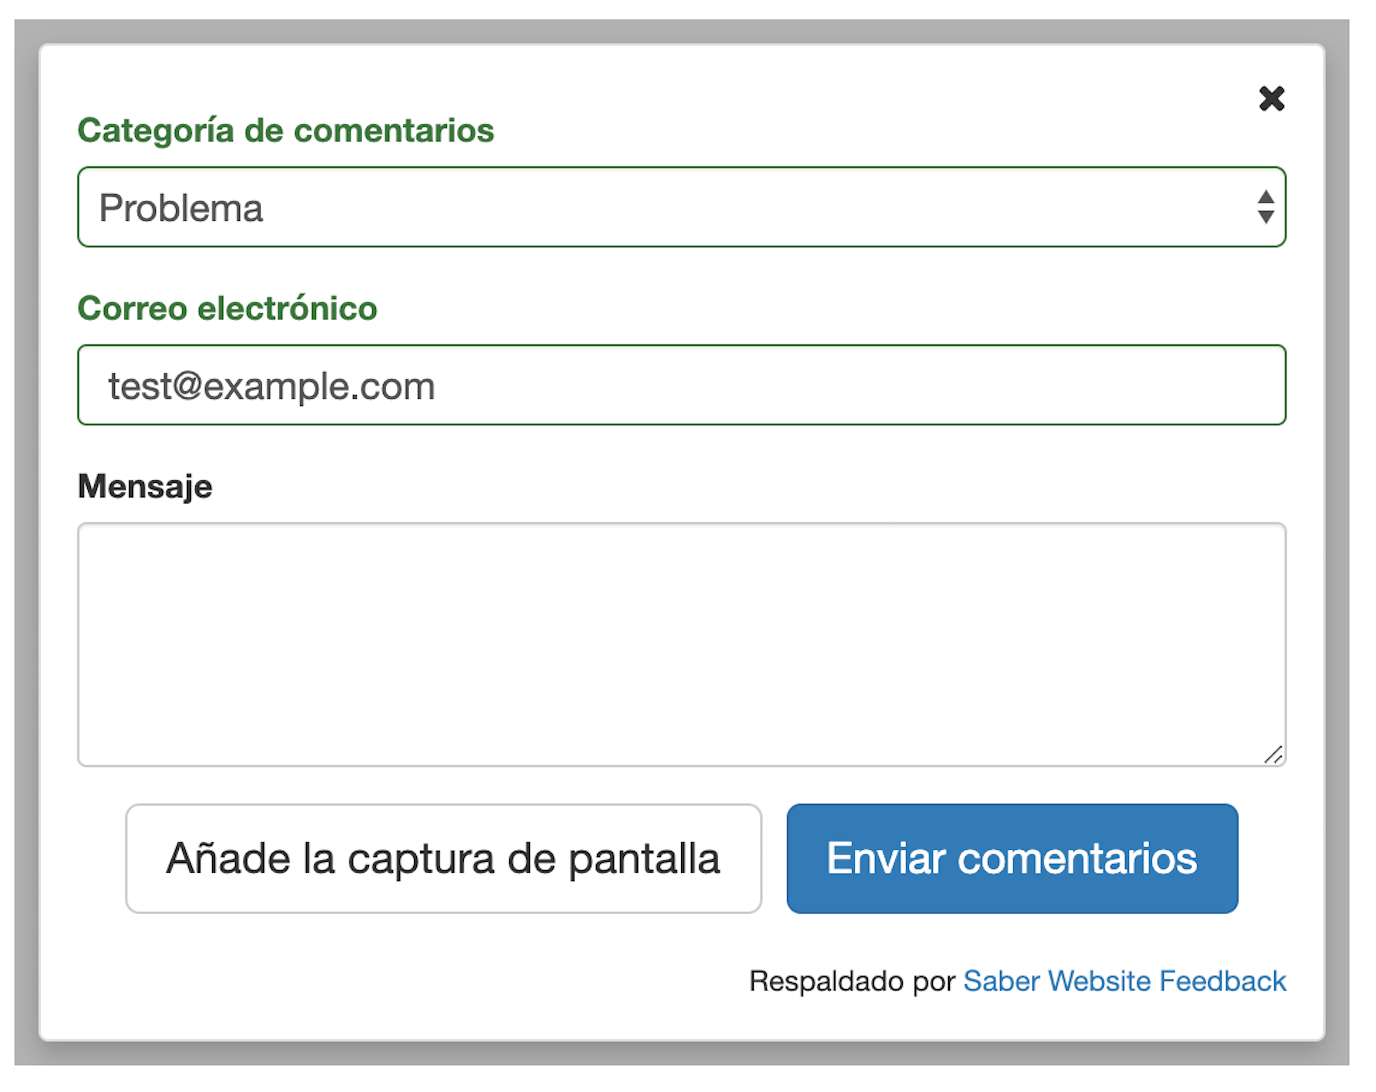 Saber feedback form in Spanish